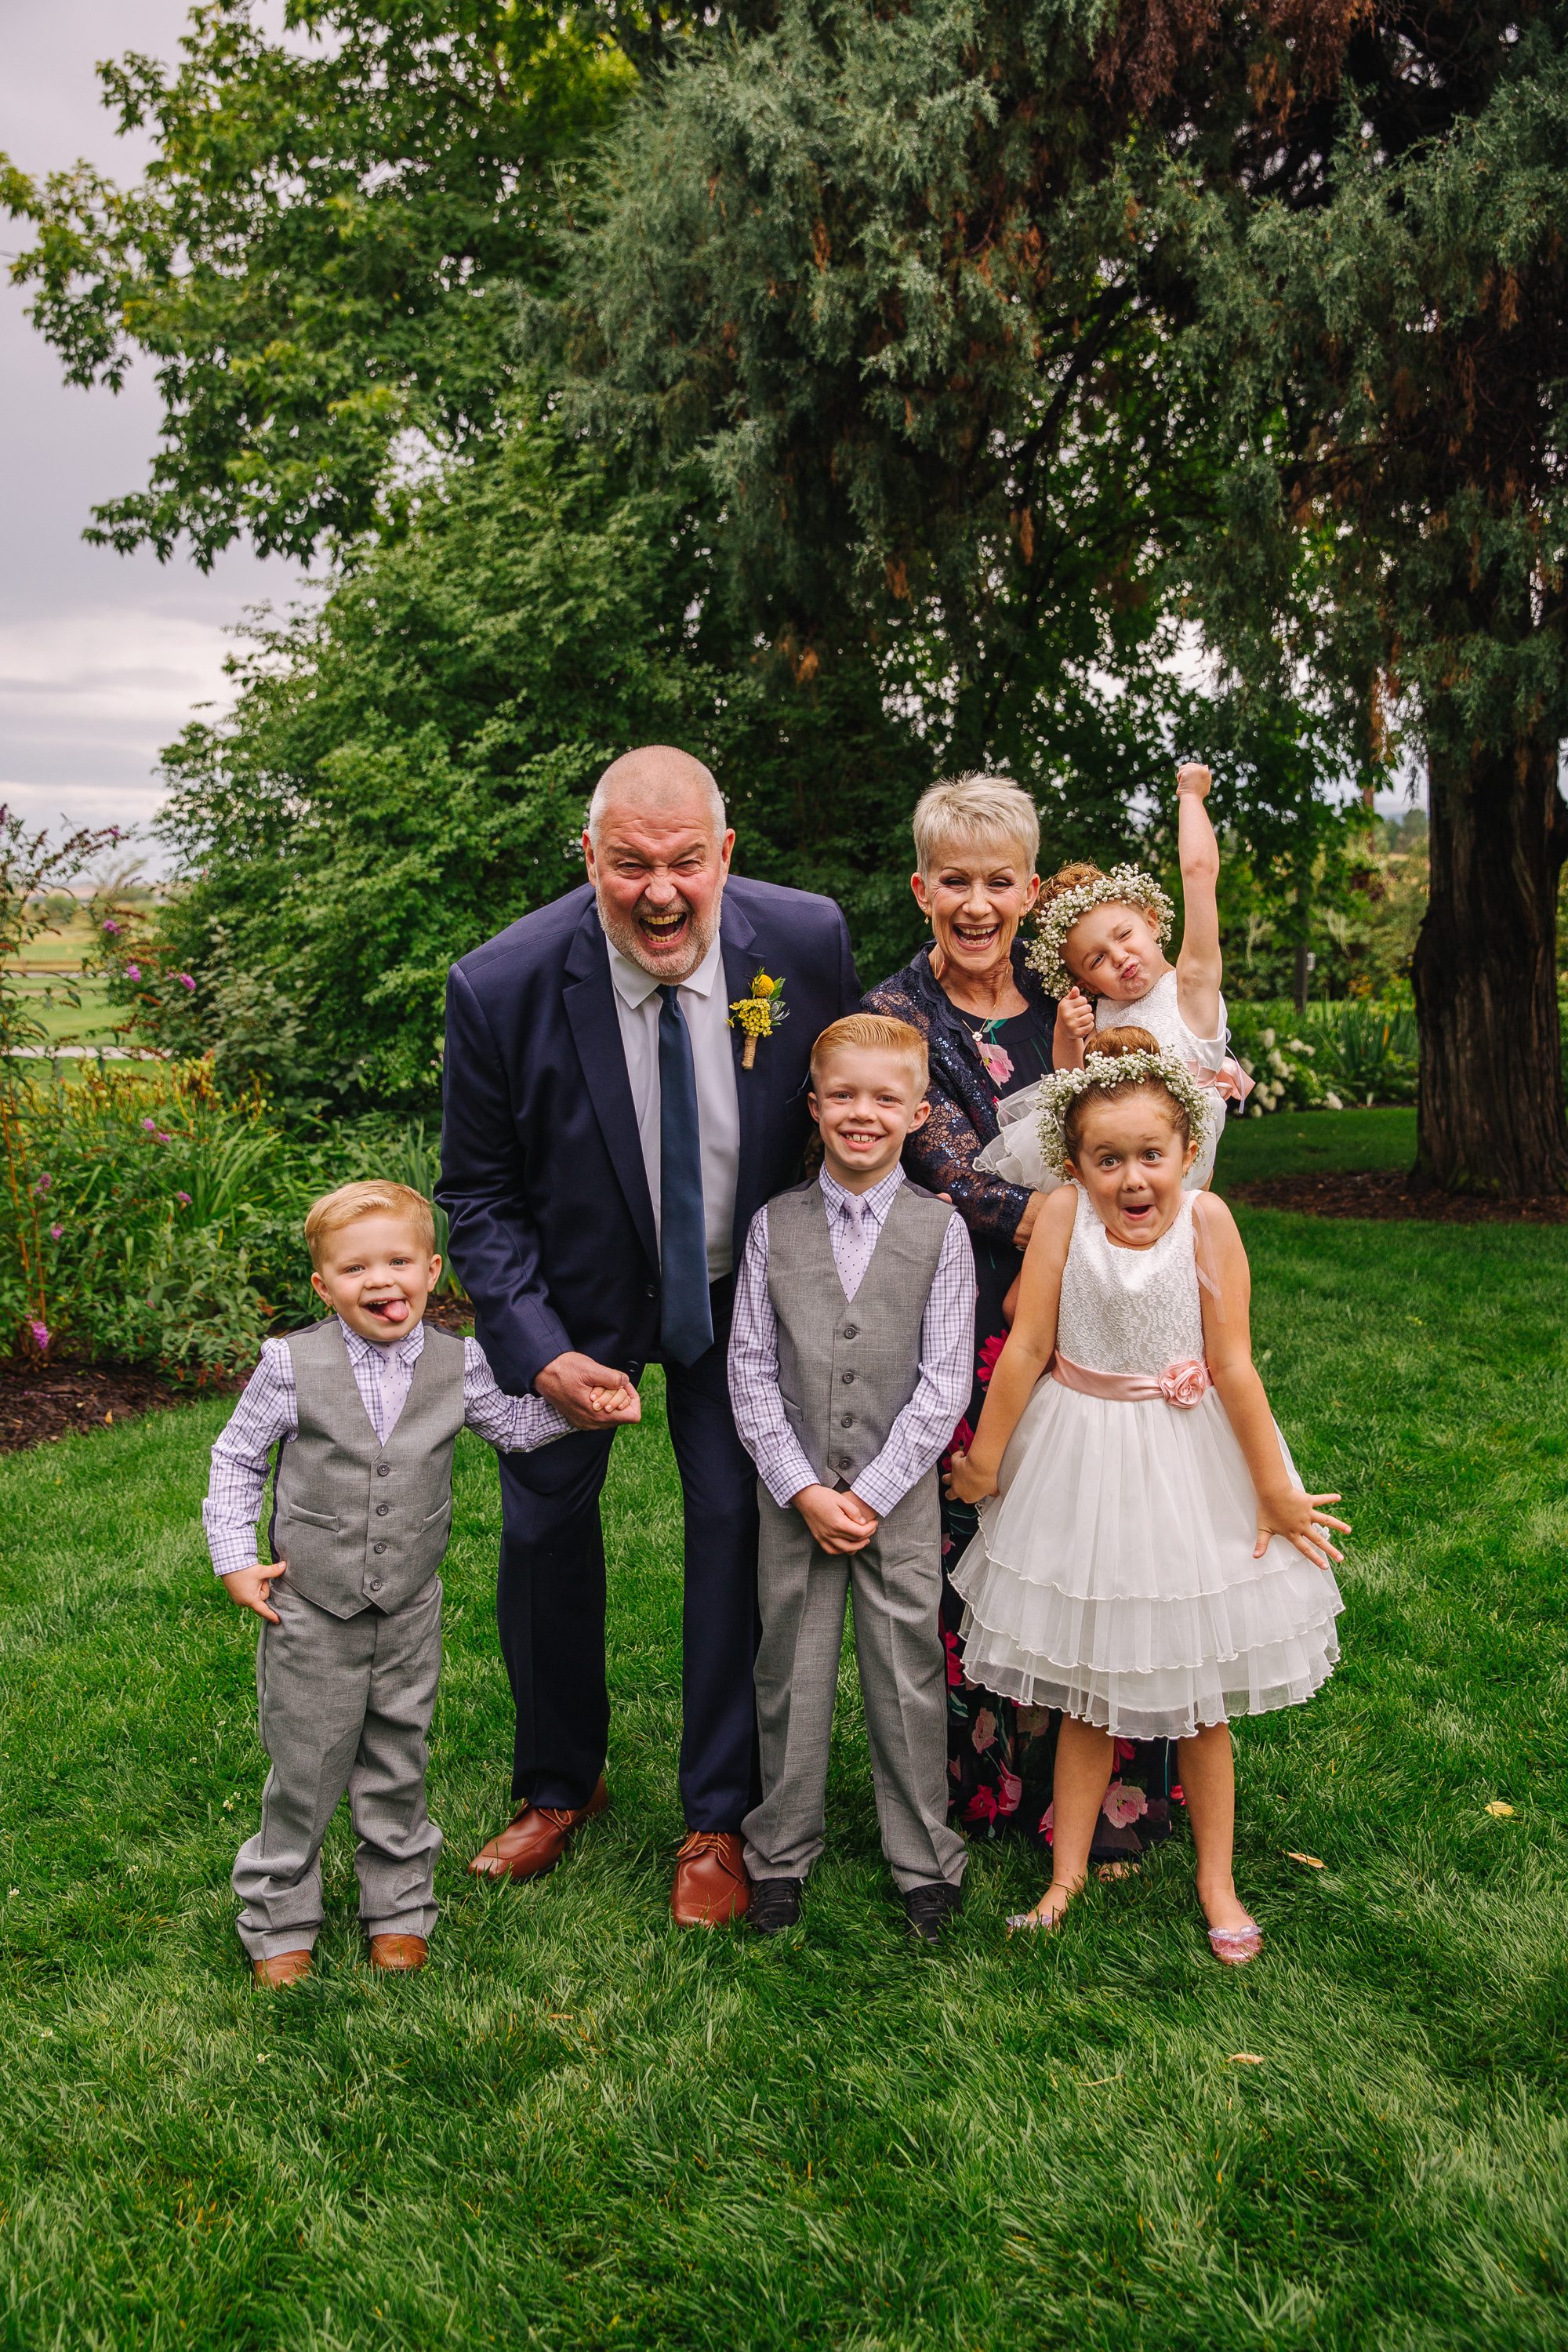 grandma and grandpa at wedding, kids at wedding, flower girl dress, flower girl and ring bearer, family photos at wedding